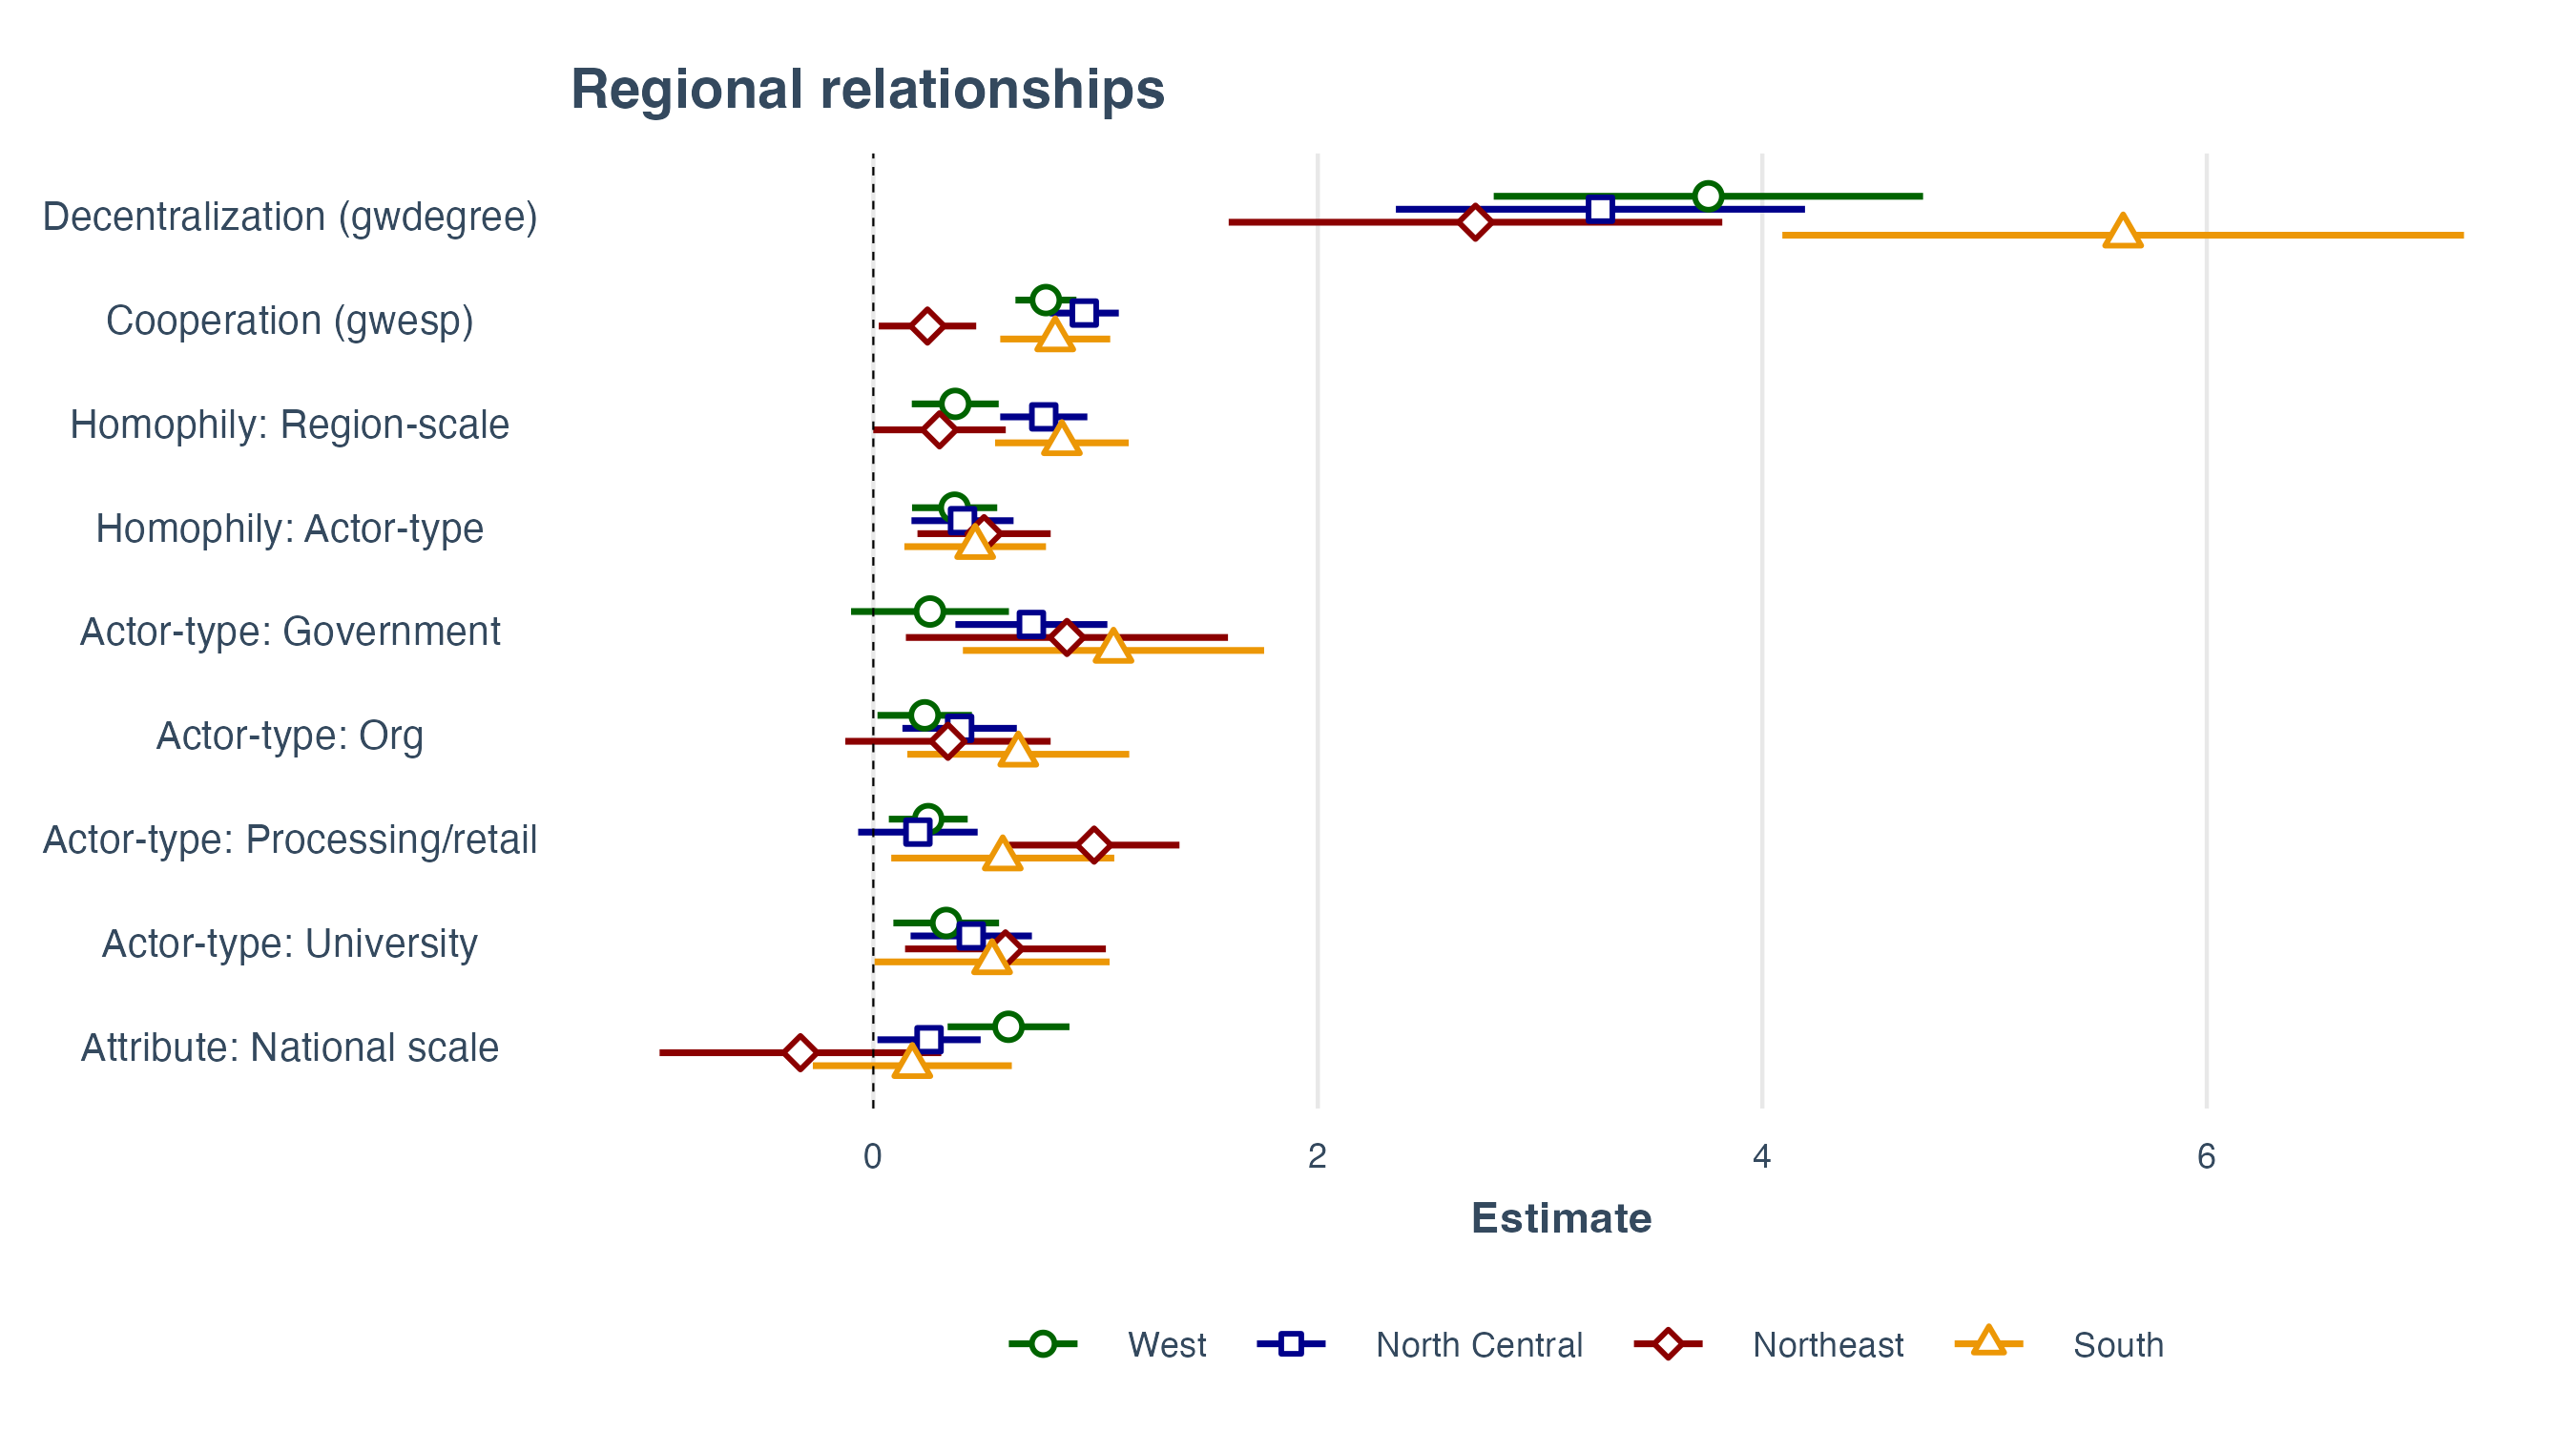 Regional coefficient plots